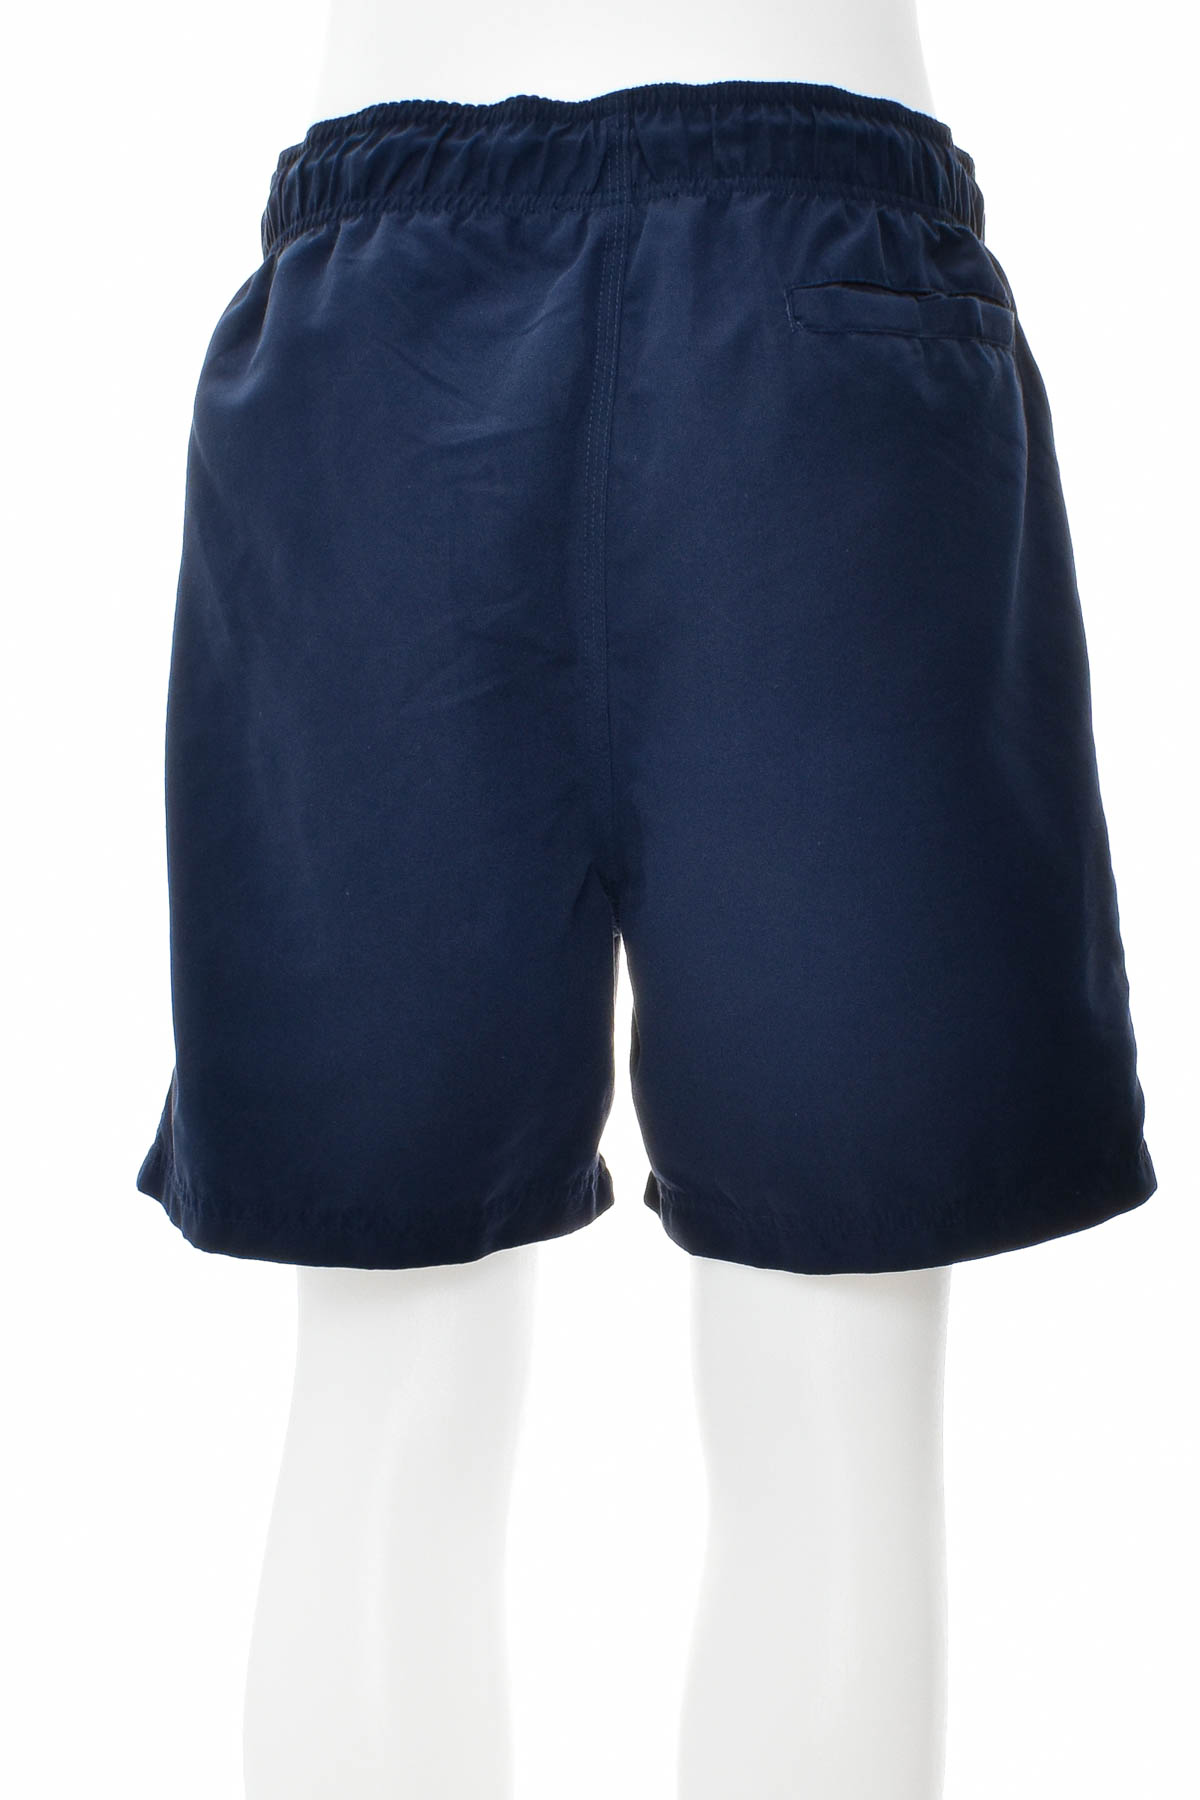 Men's shorts - Crivit - 1